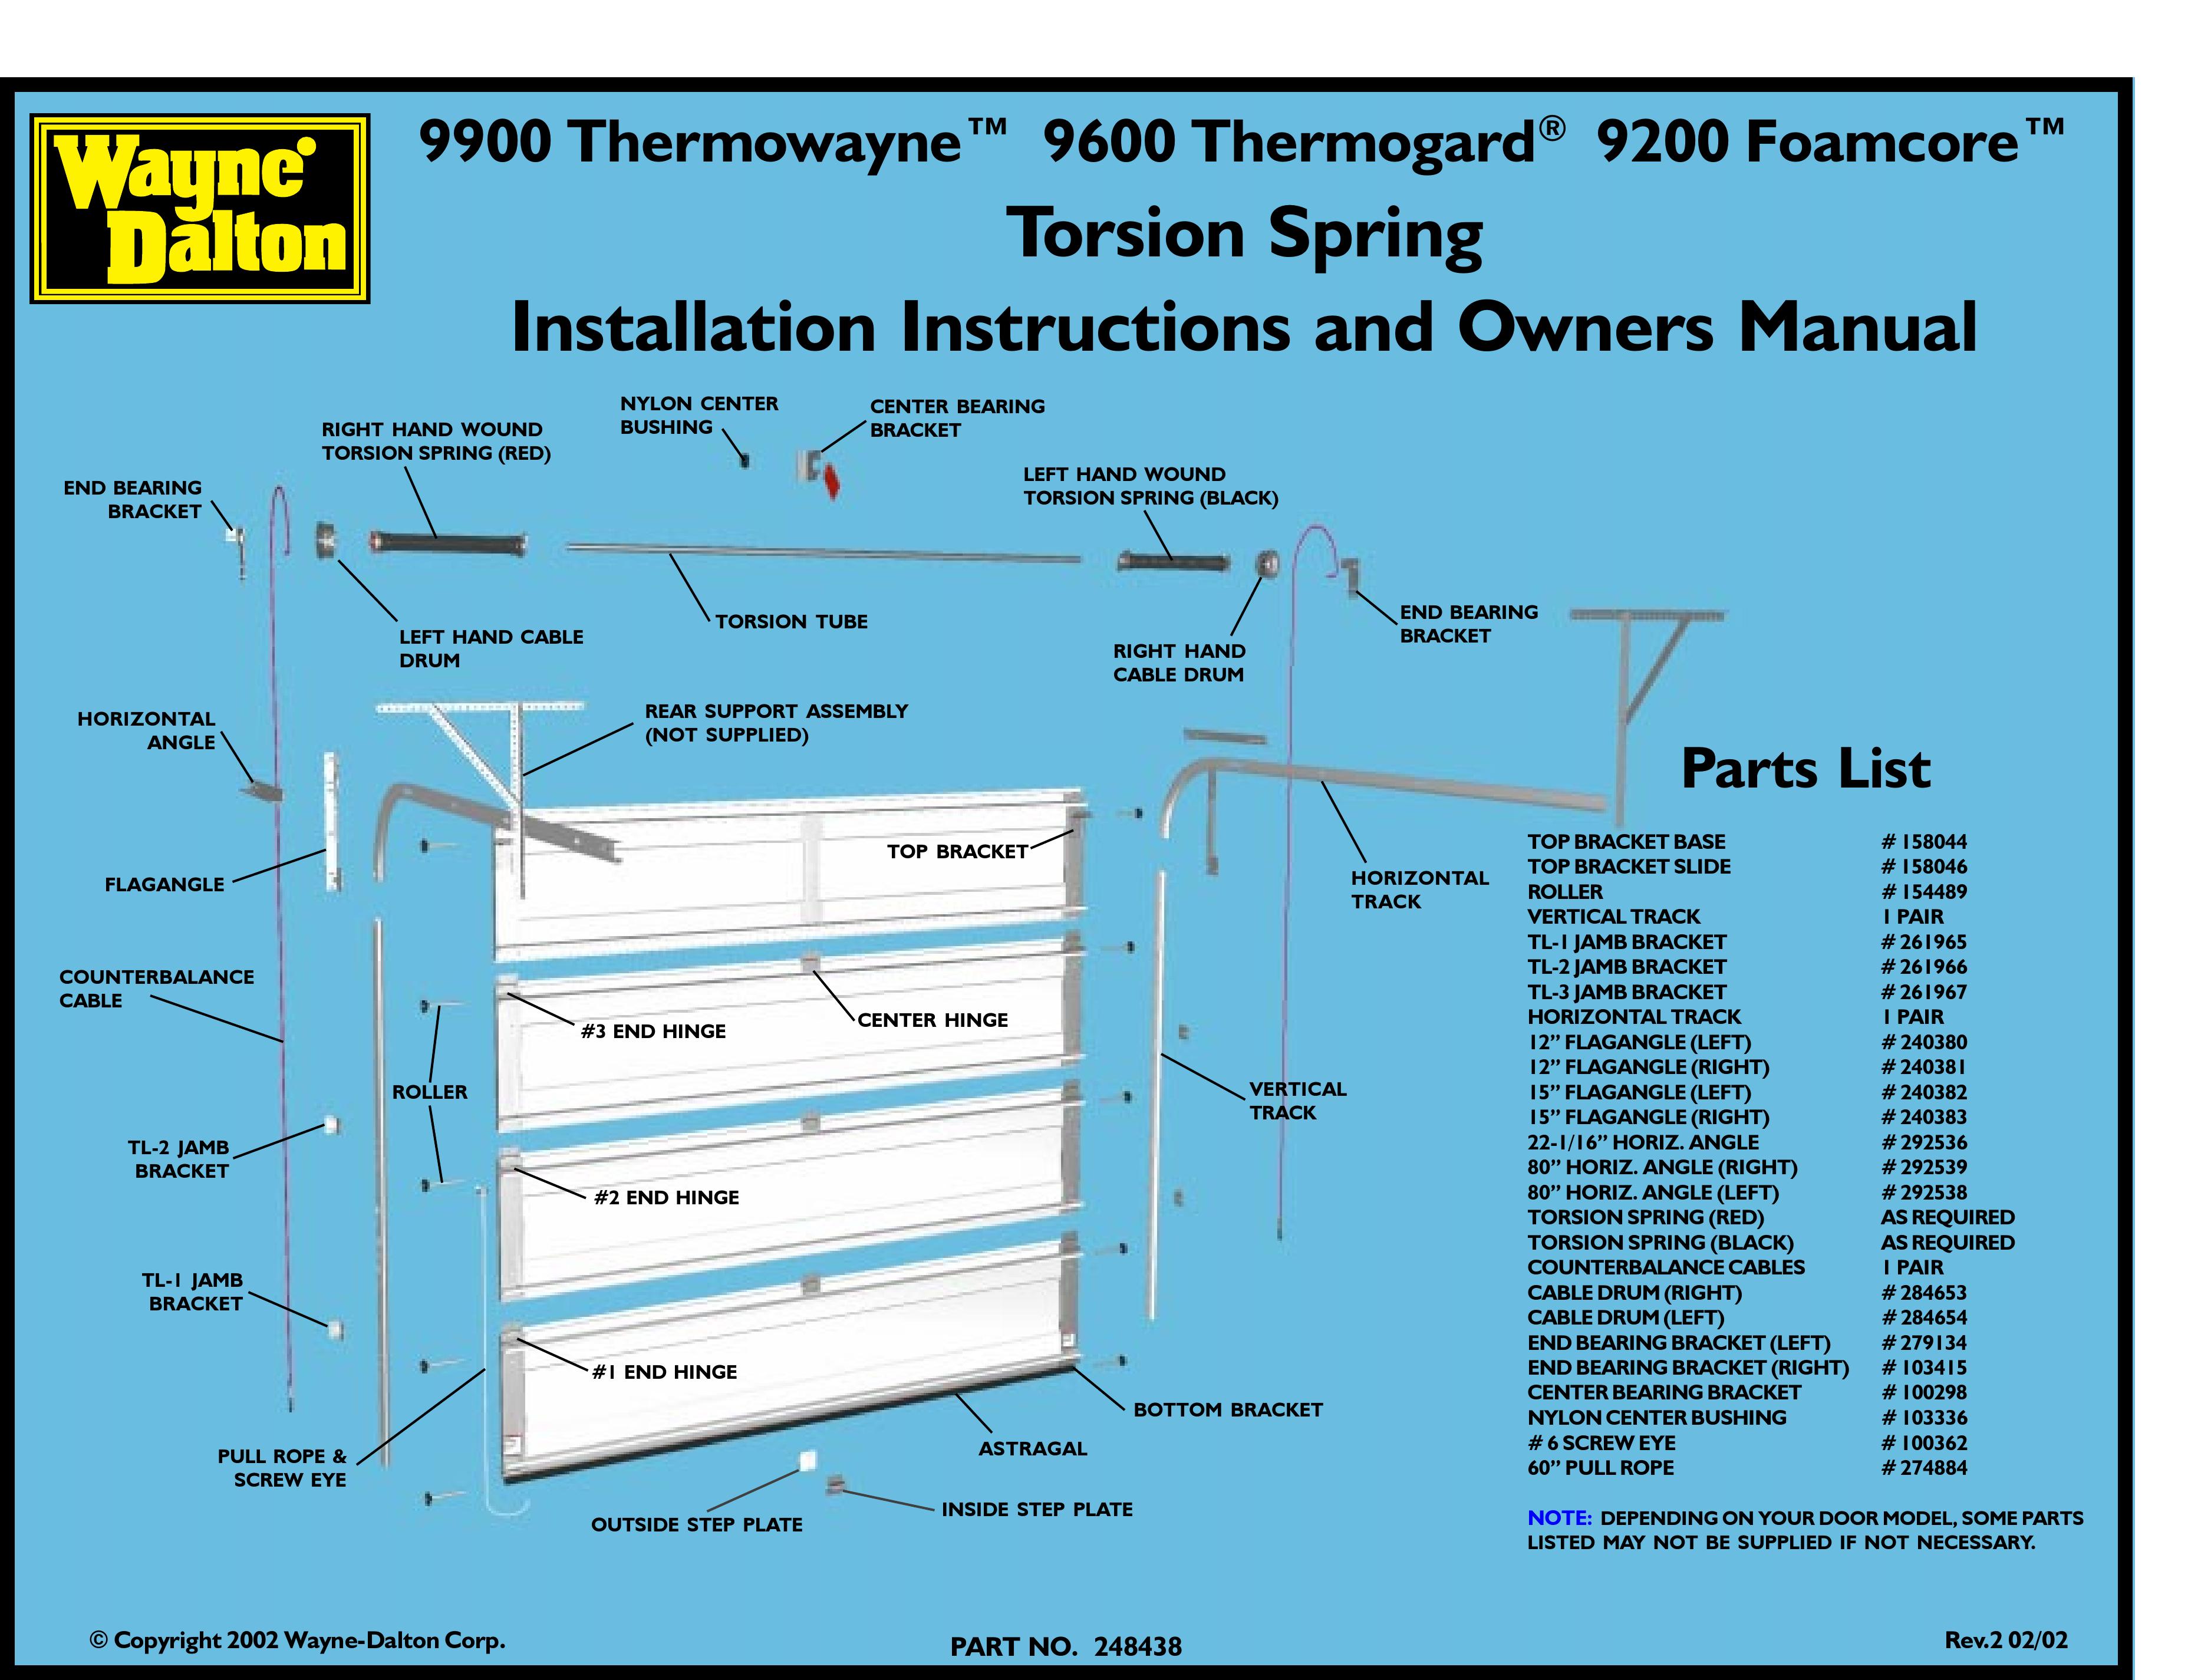 Wayne-Dalton 9200 Foamcore Thermometer User Manual